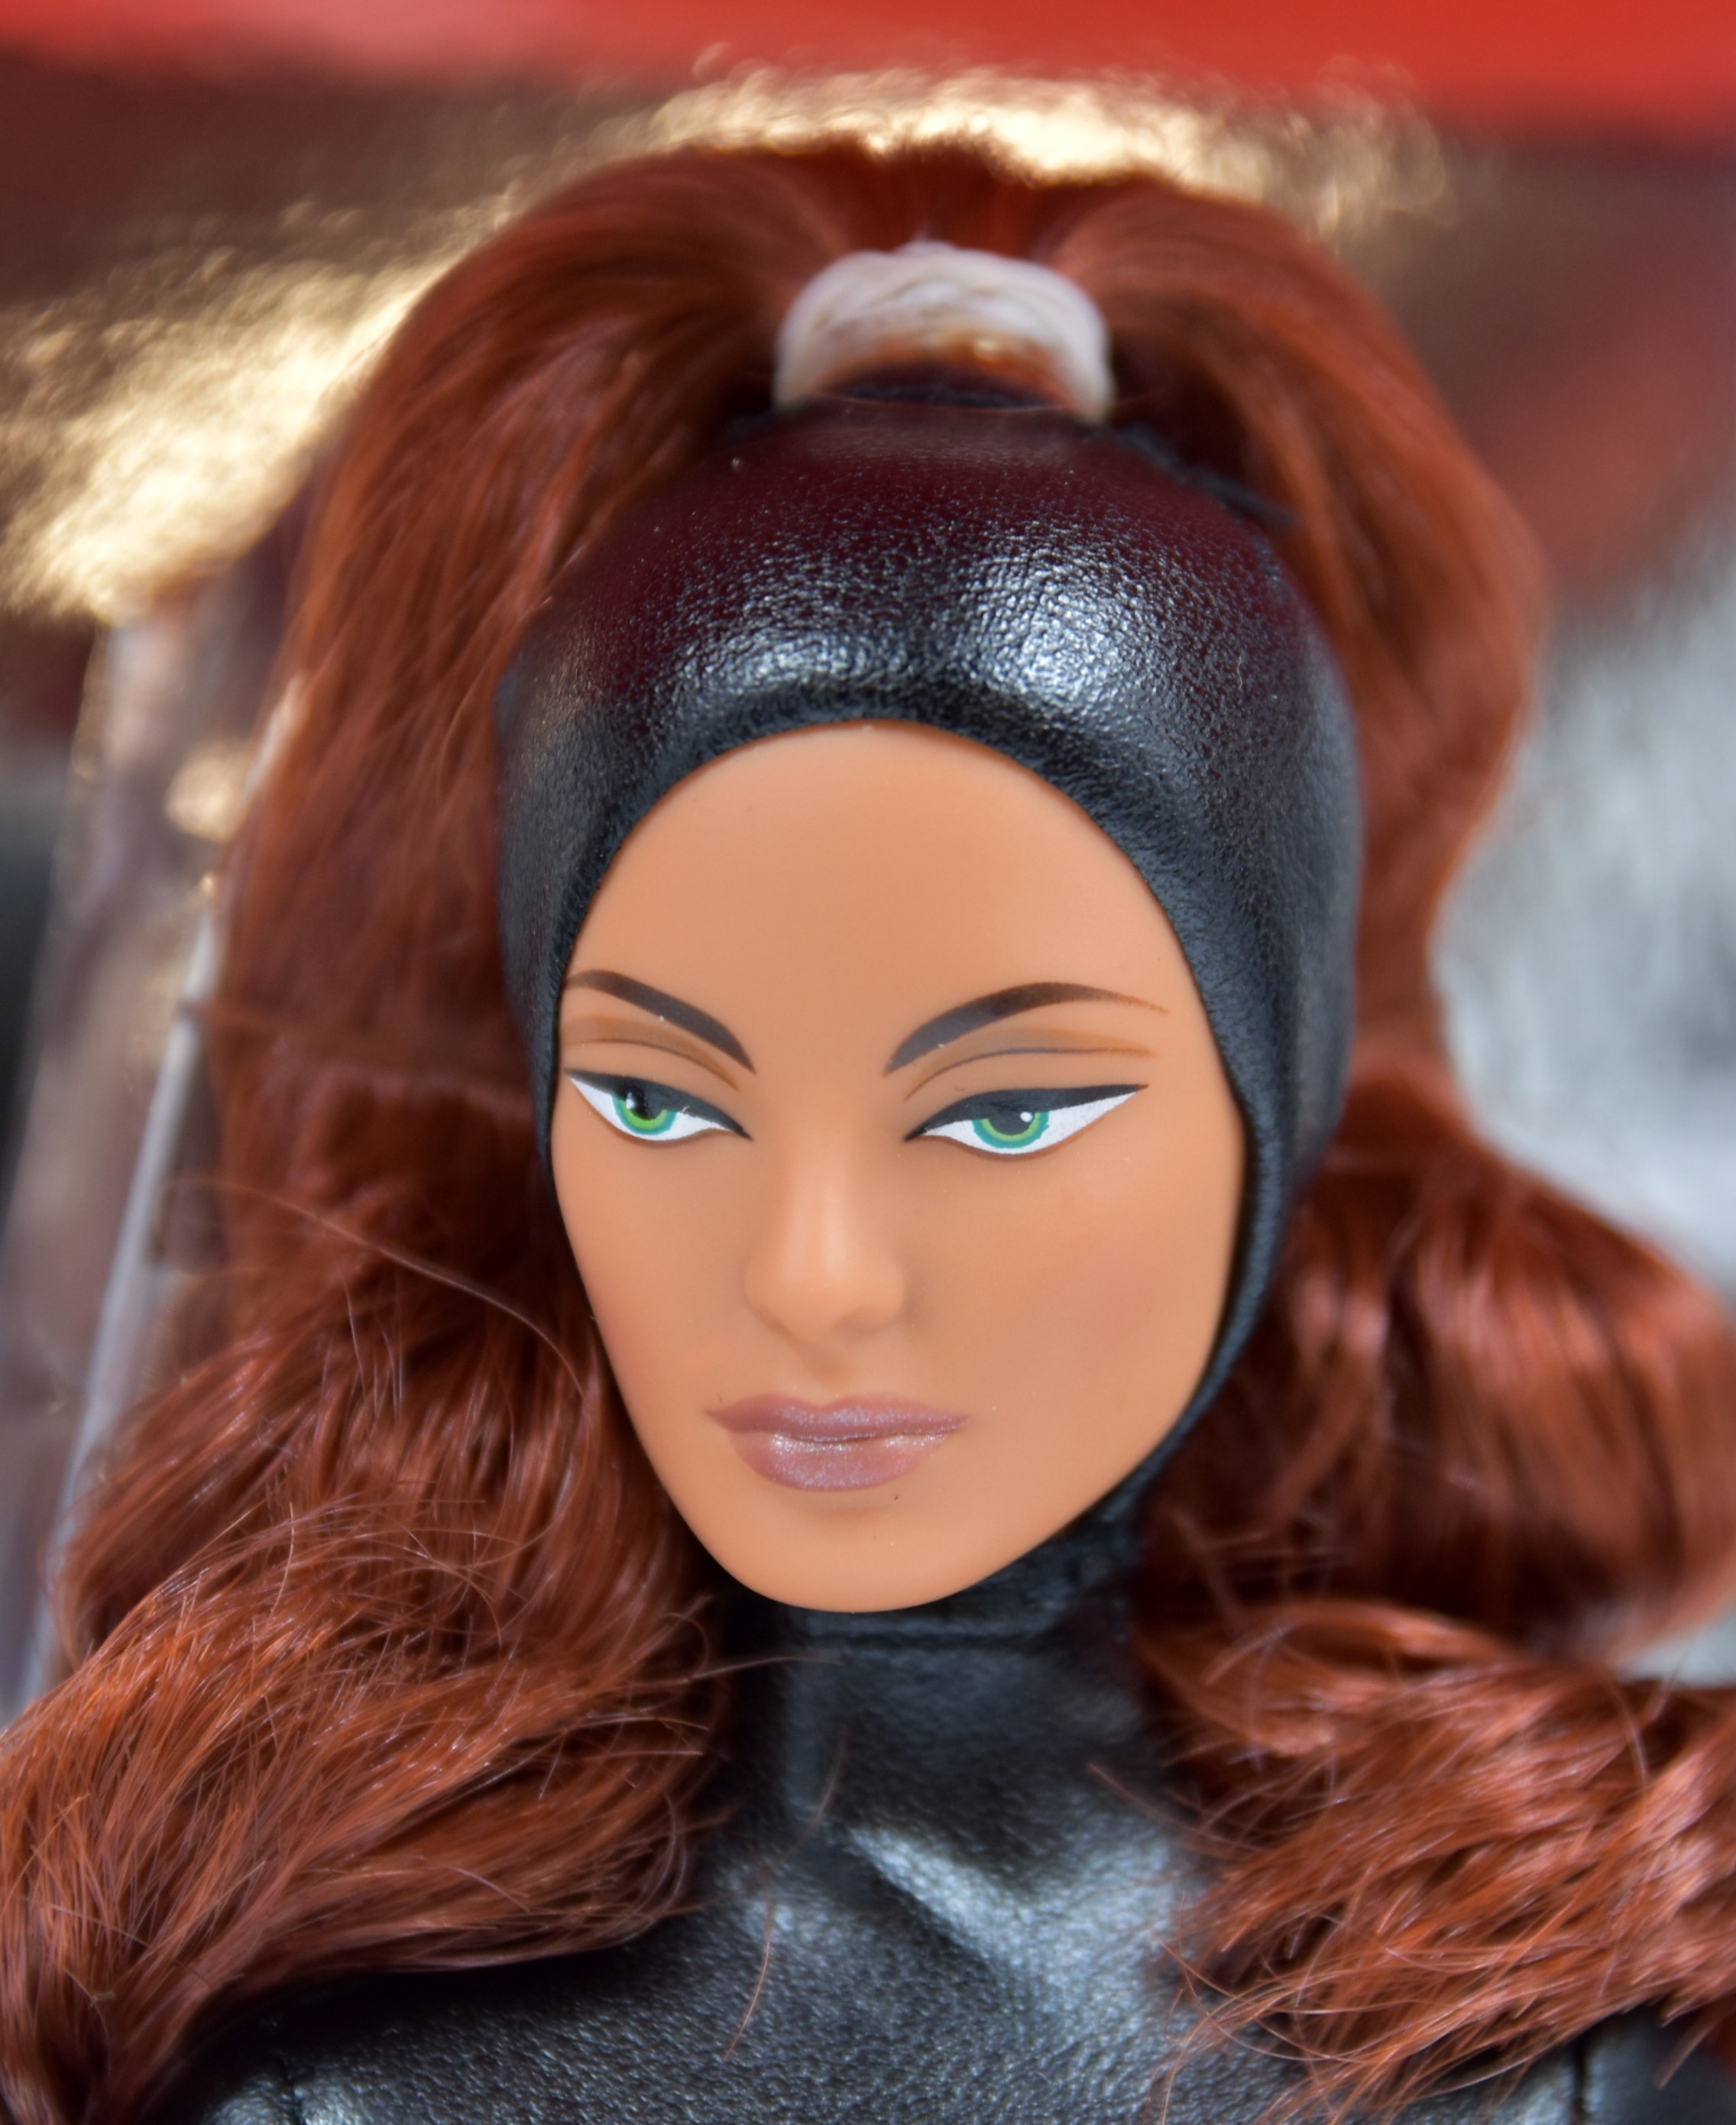 Christian Louboutin Cat Burglar Barbie Collector Doll